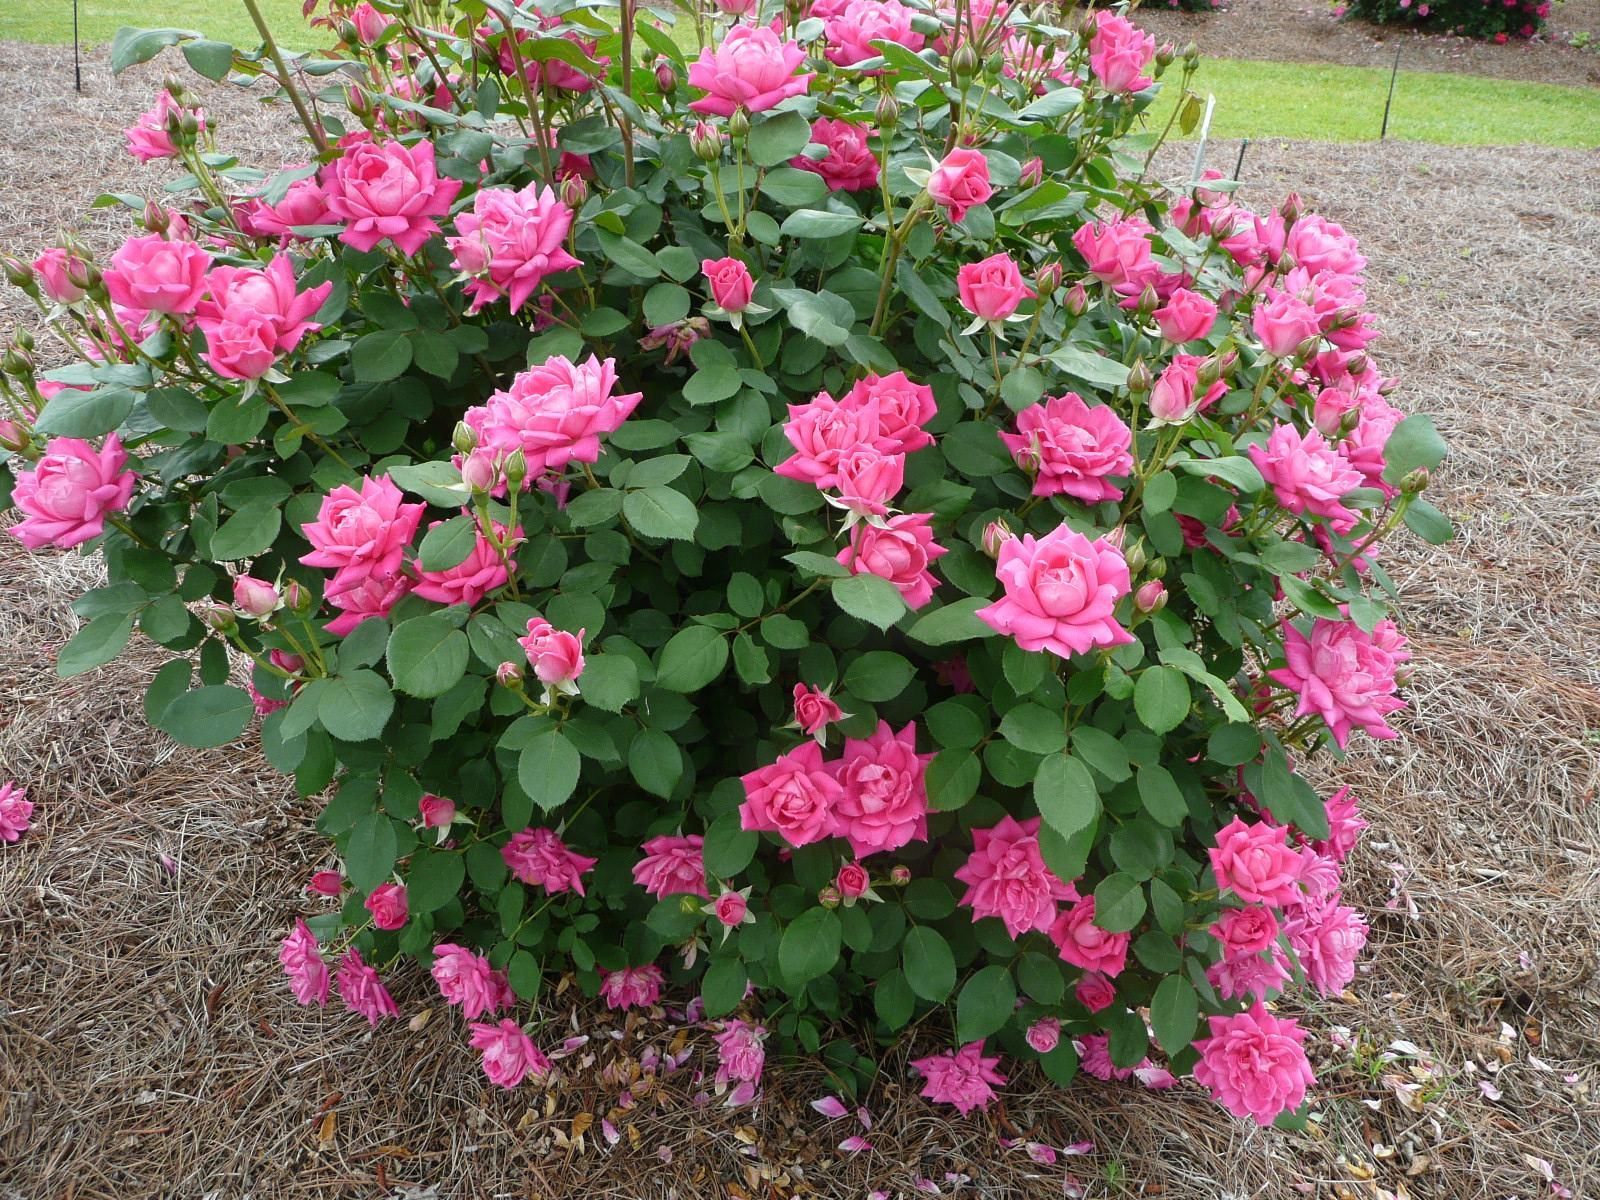 Double Pink Knockout Rose shrub flowering bush for sale in Lebanon